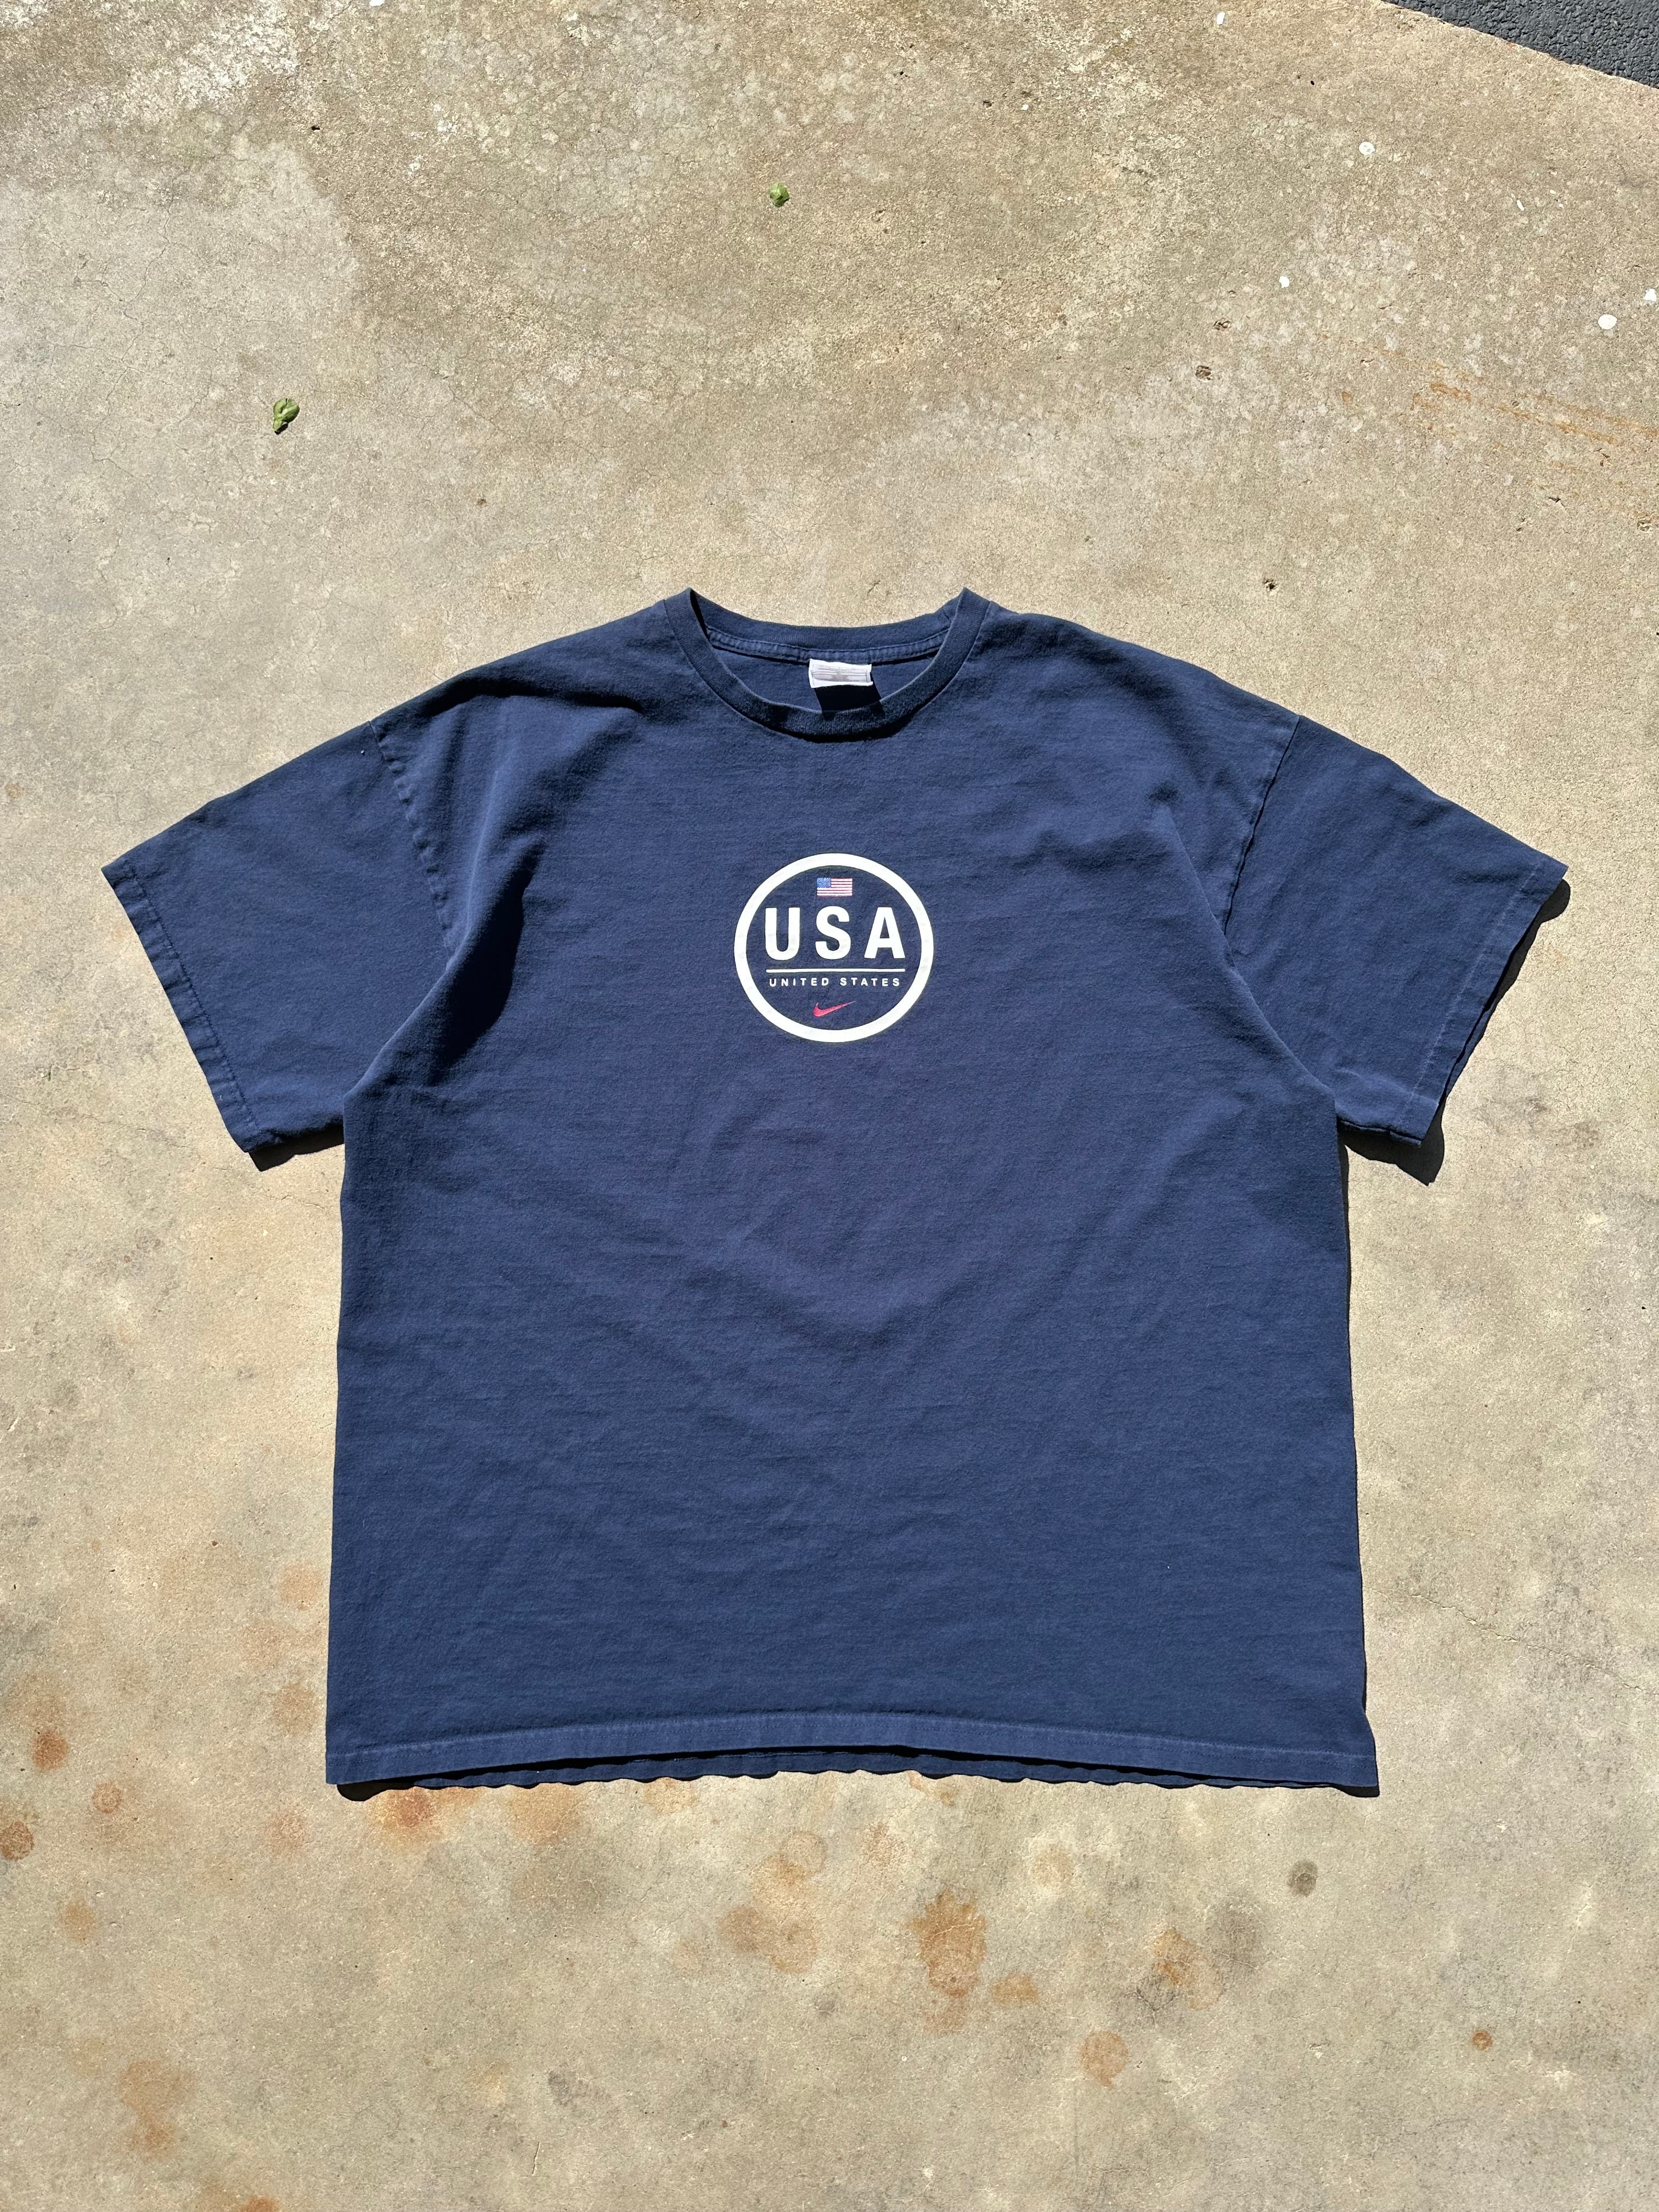 1990s Nike USA T-Shirt (XXL)